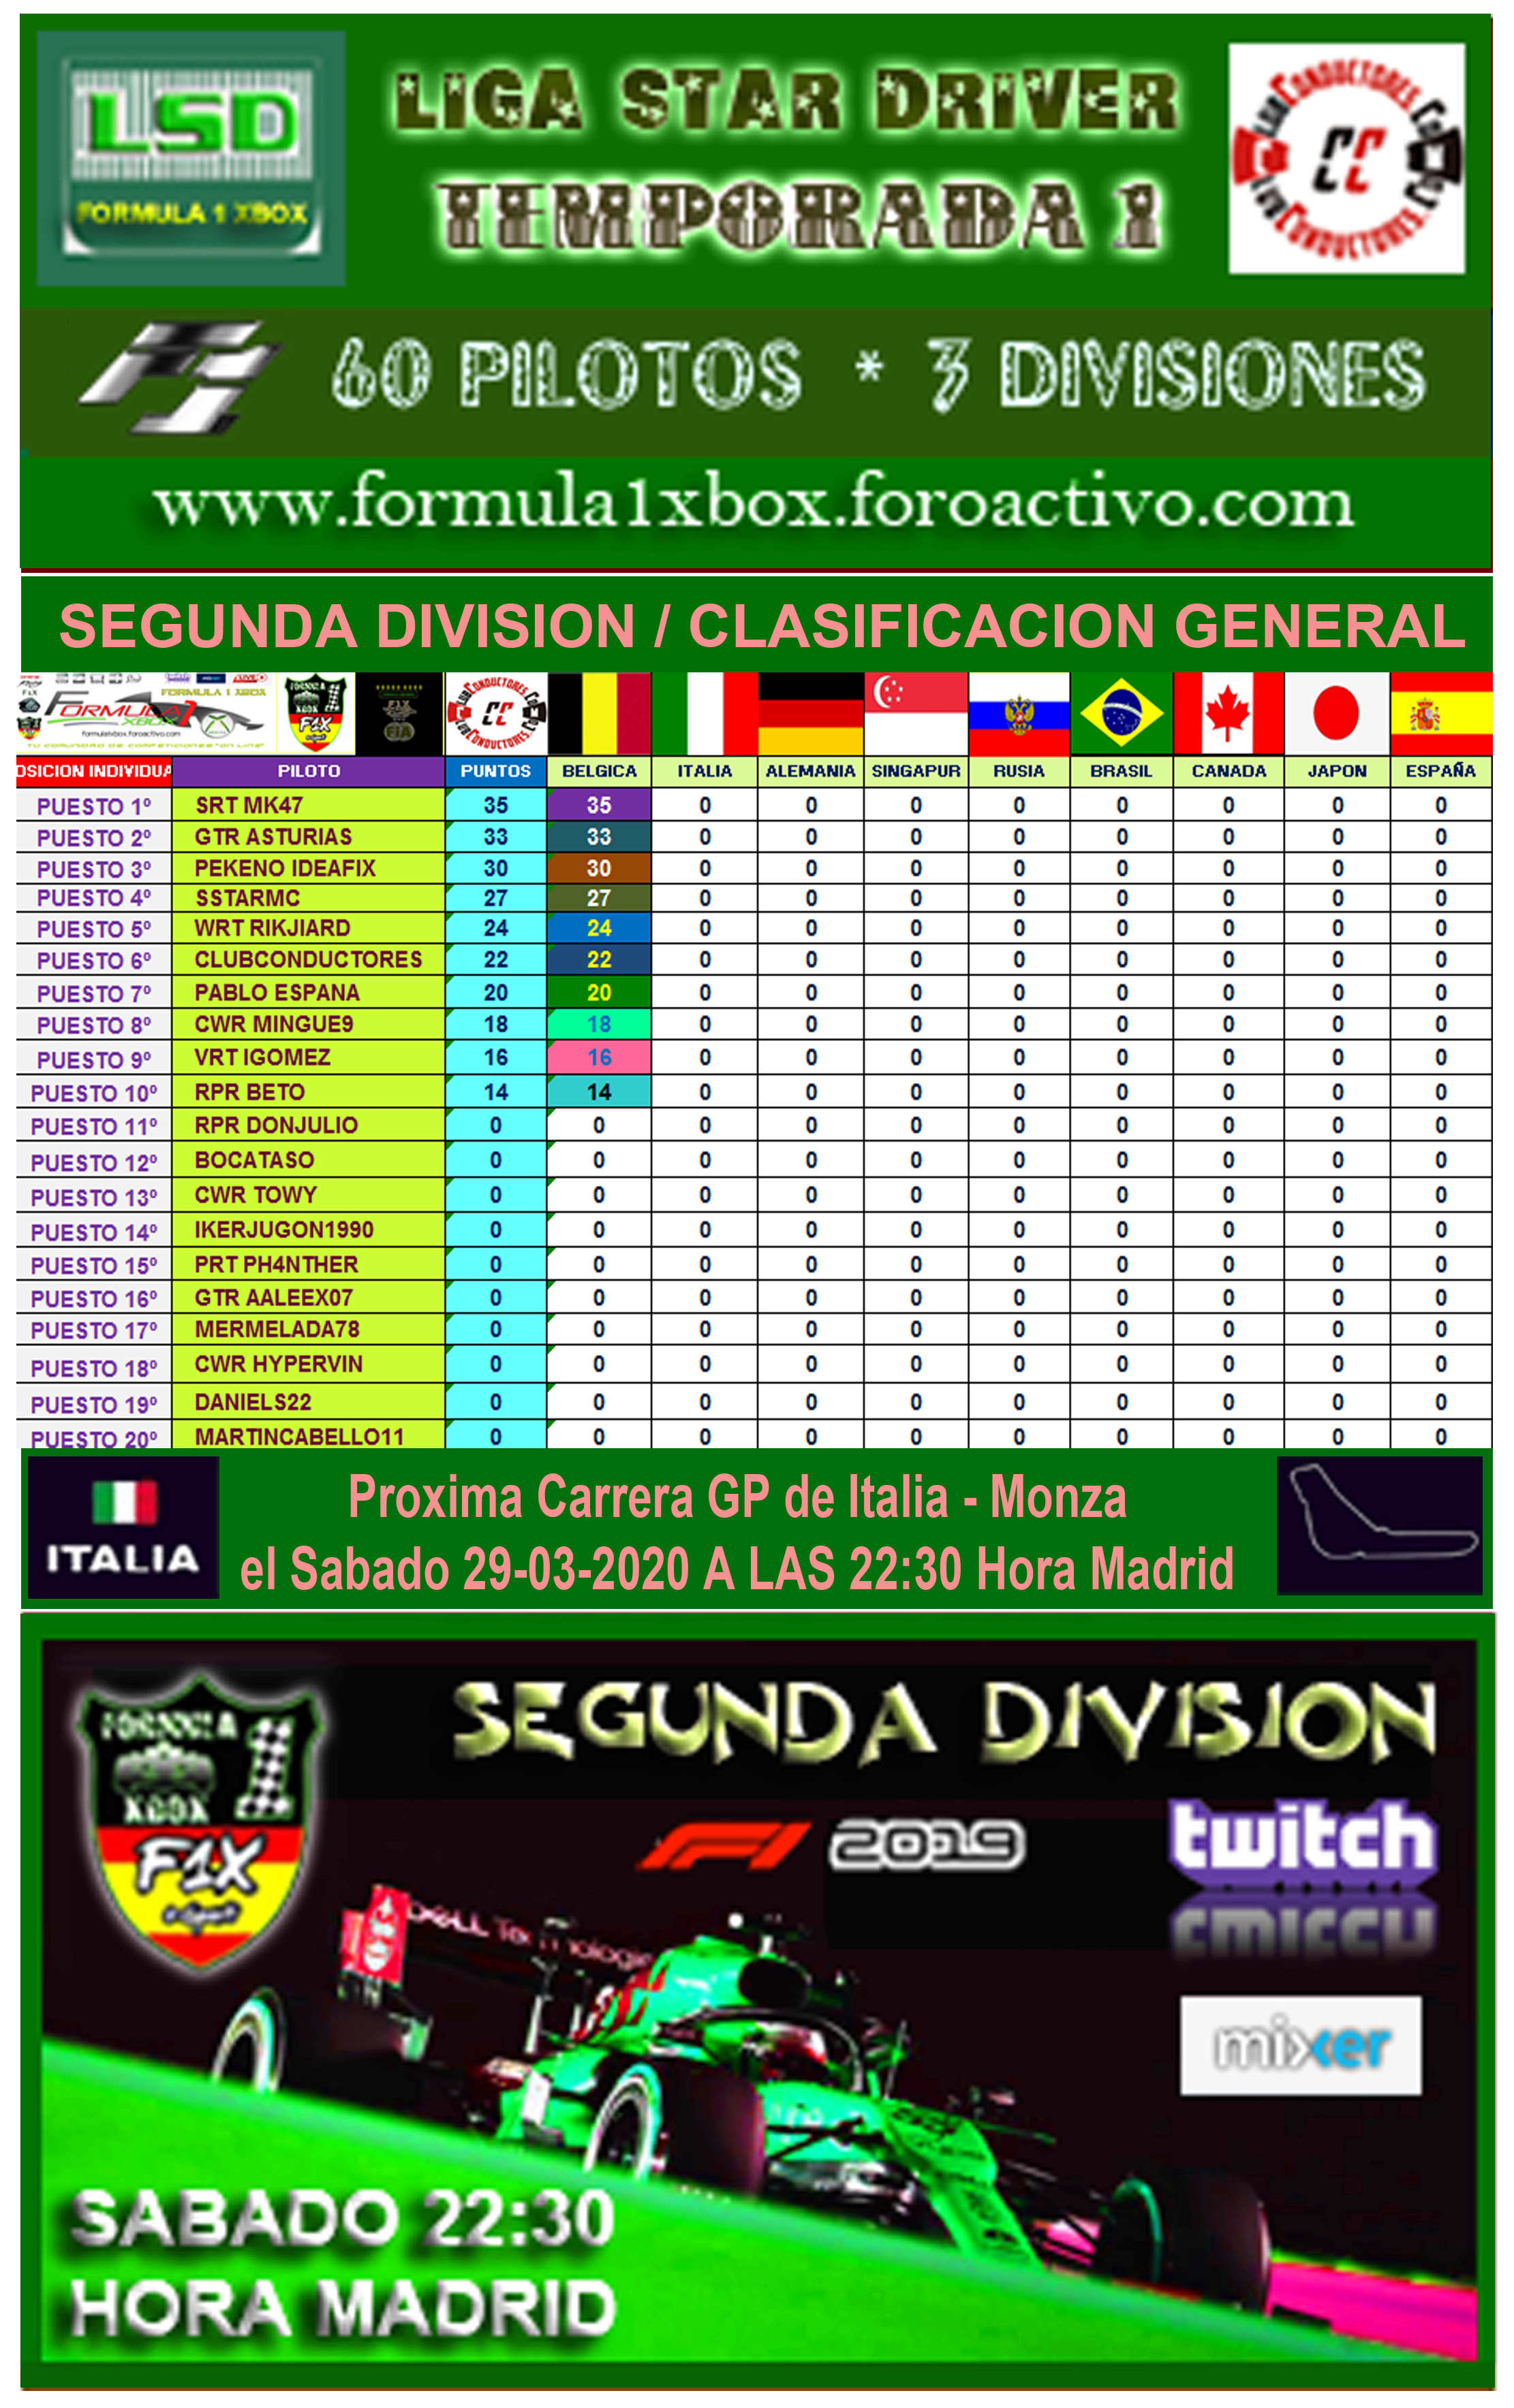 F1 2019 - XBOX ONE / LIGA STAR DRIVER I * INDIVIDUAL / CLASIFICACION GENERAL /  RESULTADOS RACE 1 - BELGICA / DIVISION 2 Segund10